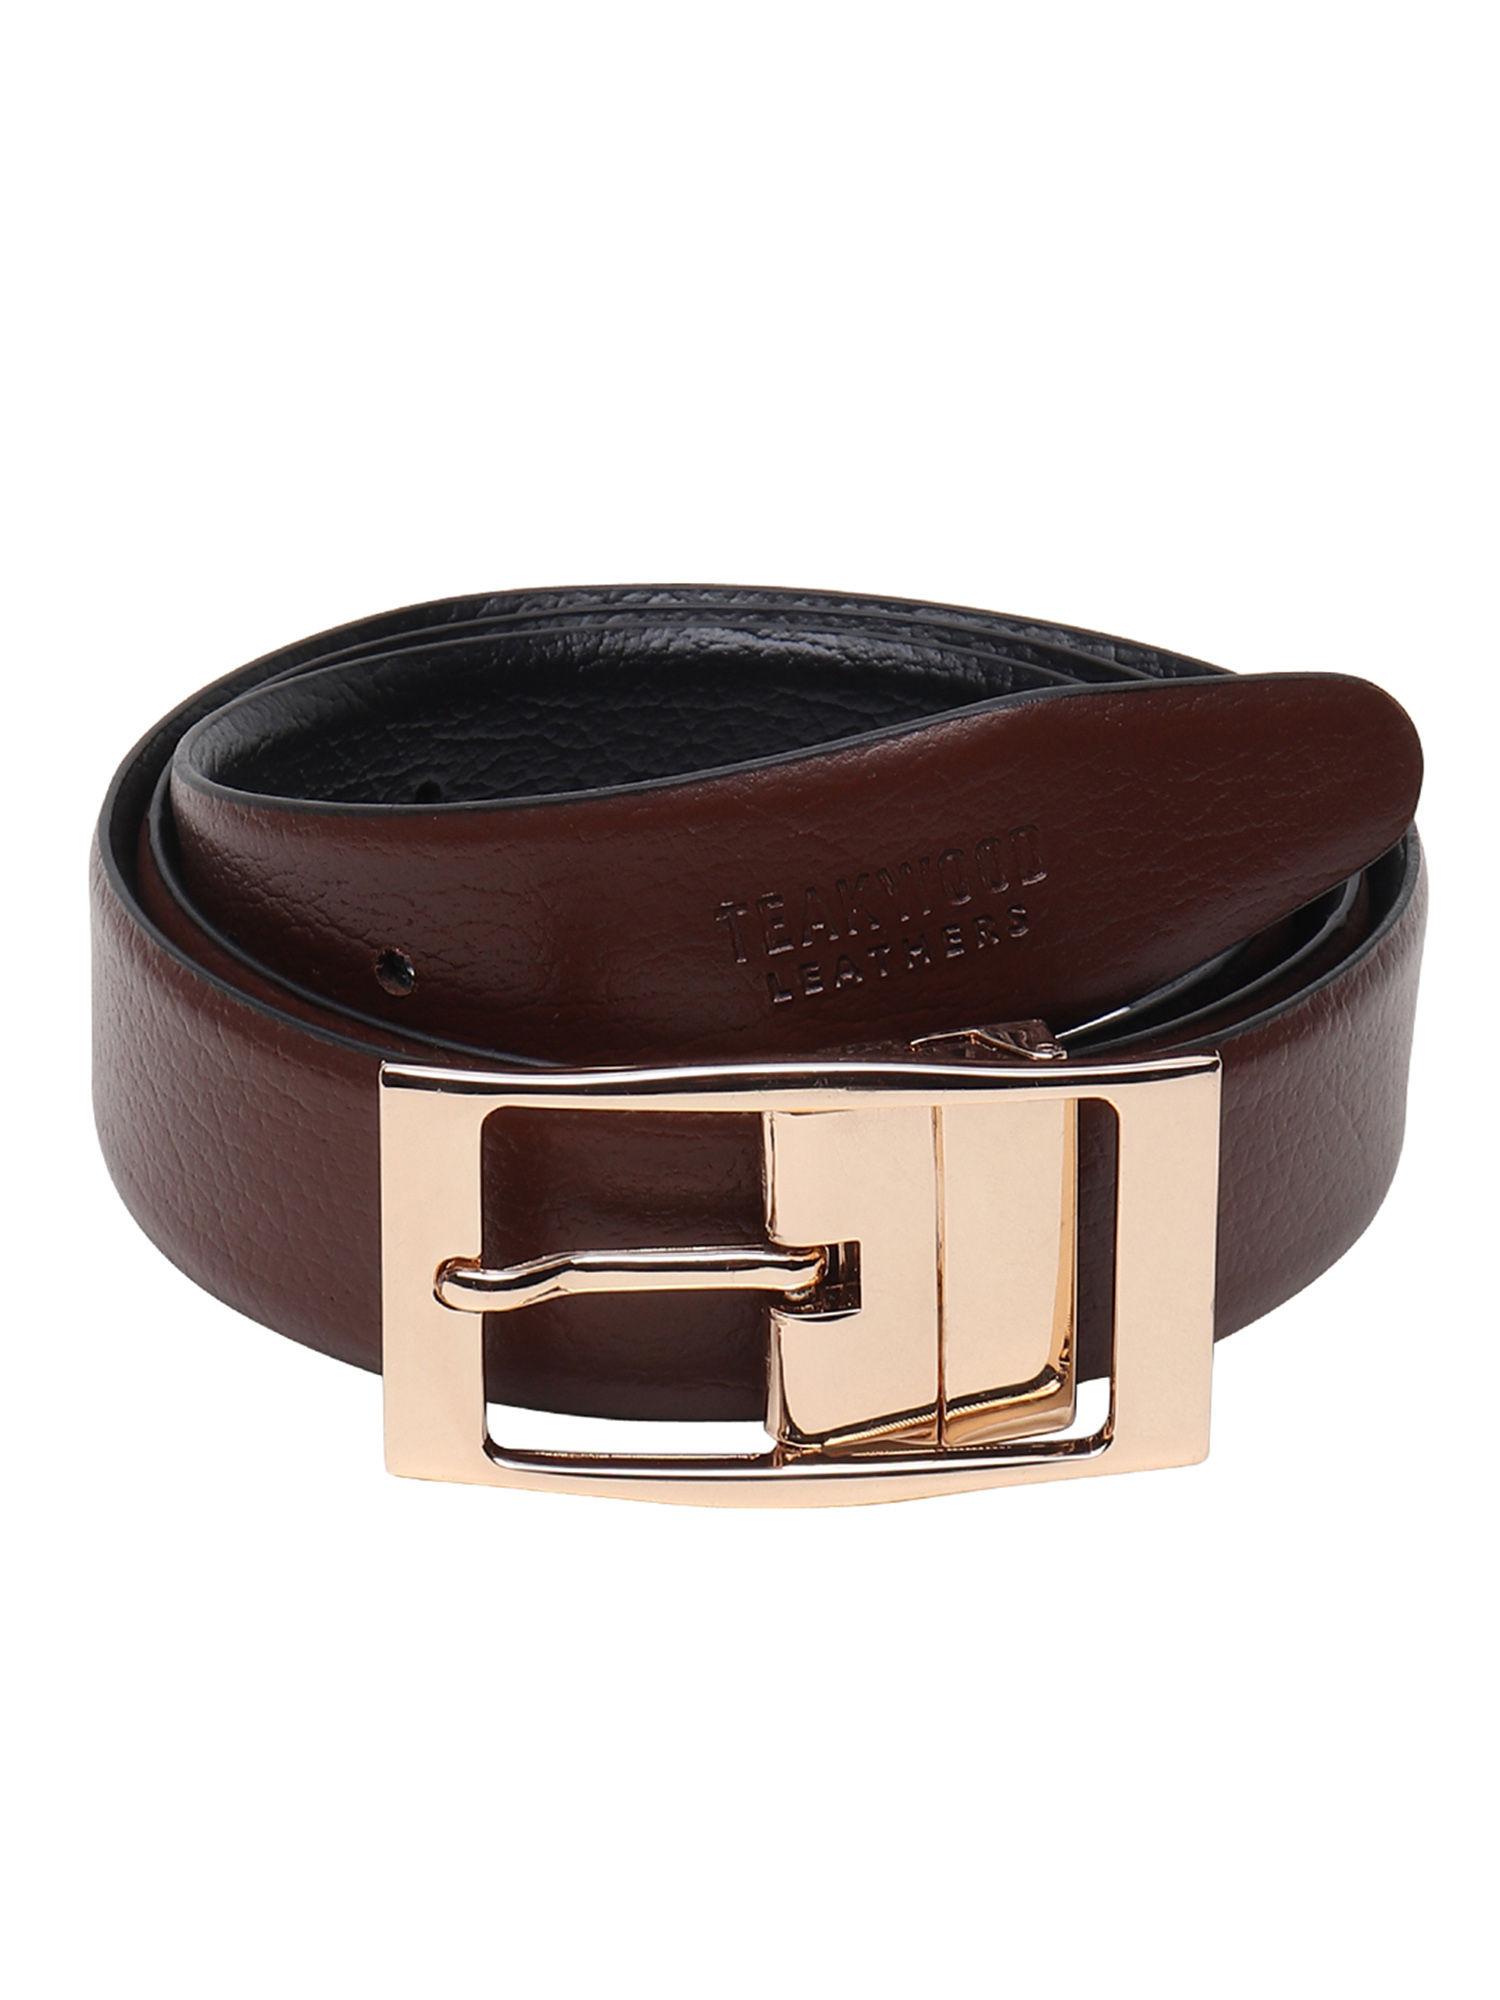 men black & brown textured leather semi formal reversible belt